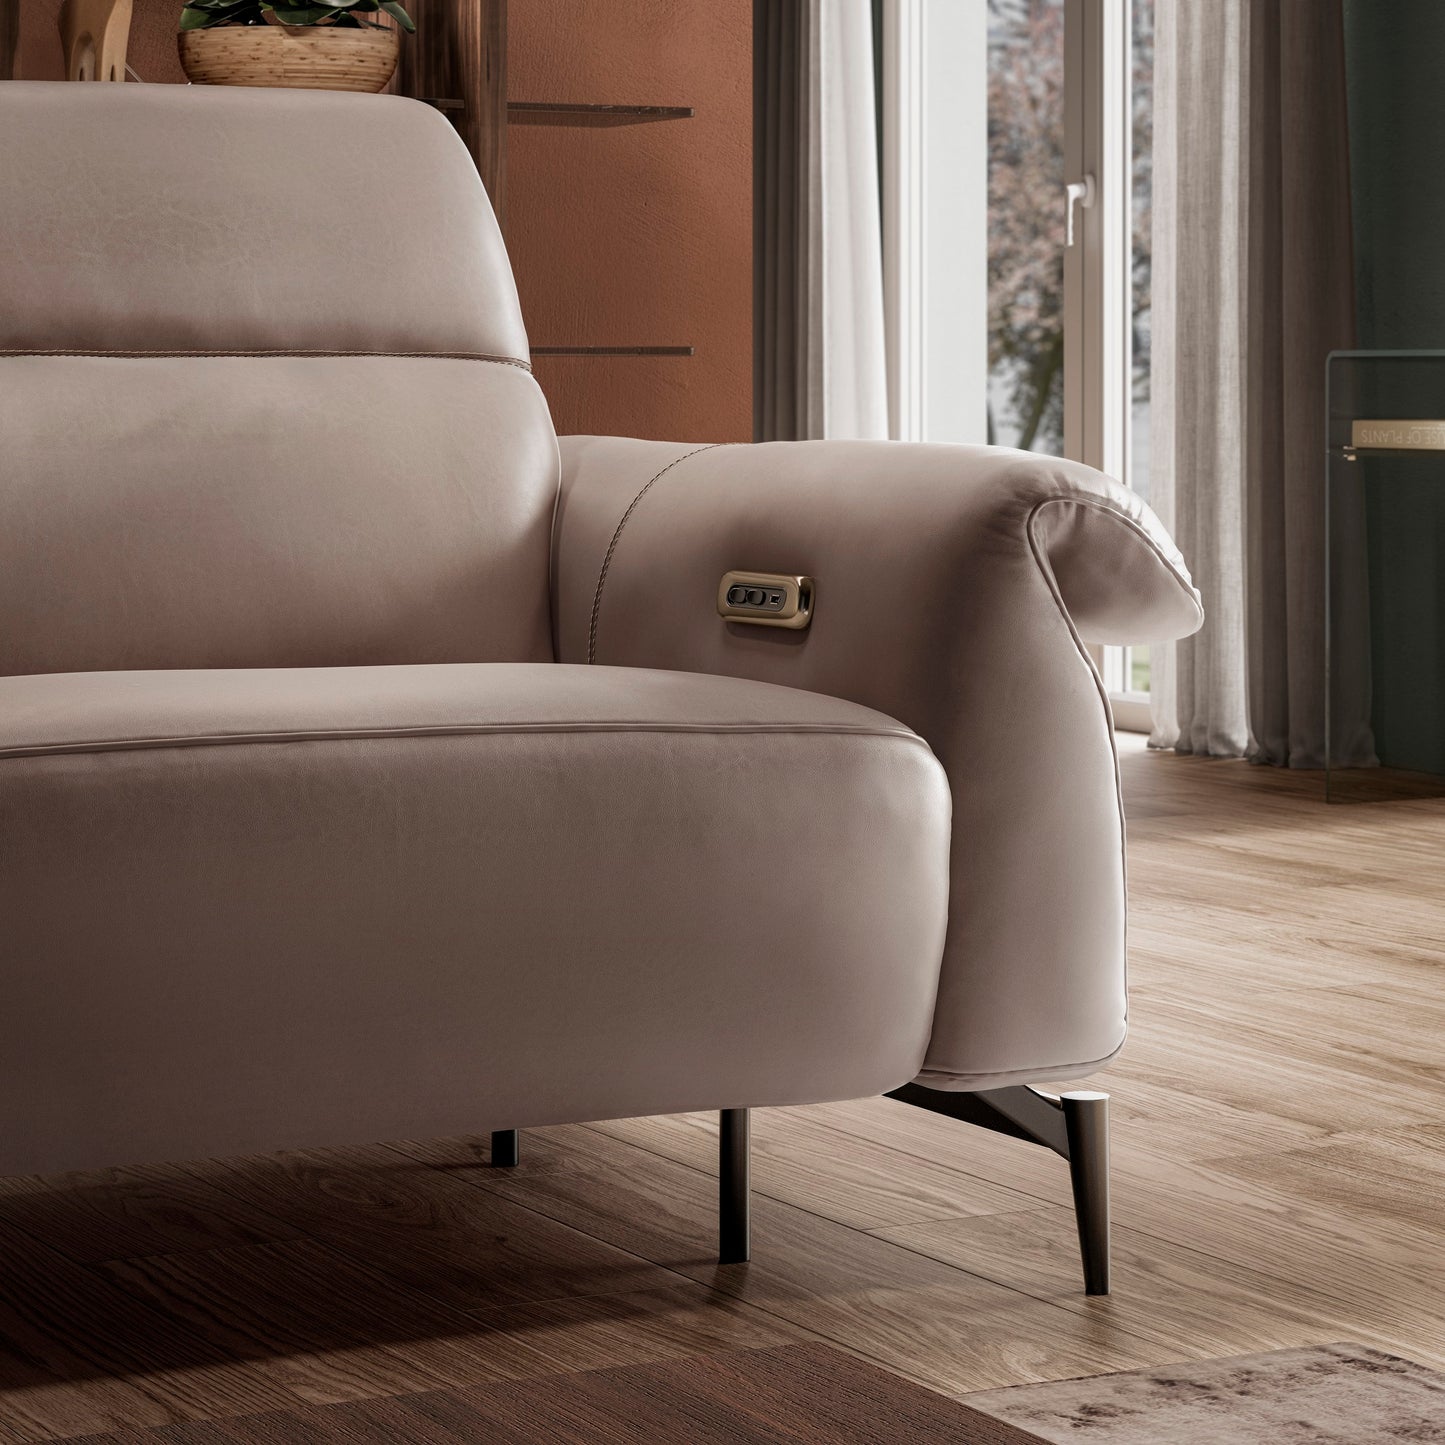 Natuzzi Editions Leggiadro C143 Modular Sofa. Available from your Natuzzi Stockist Make Your House A Home, Bendigo, Victoria. Australia wide delivery to Melbourne. Italian leather.